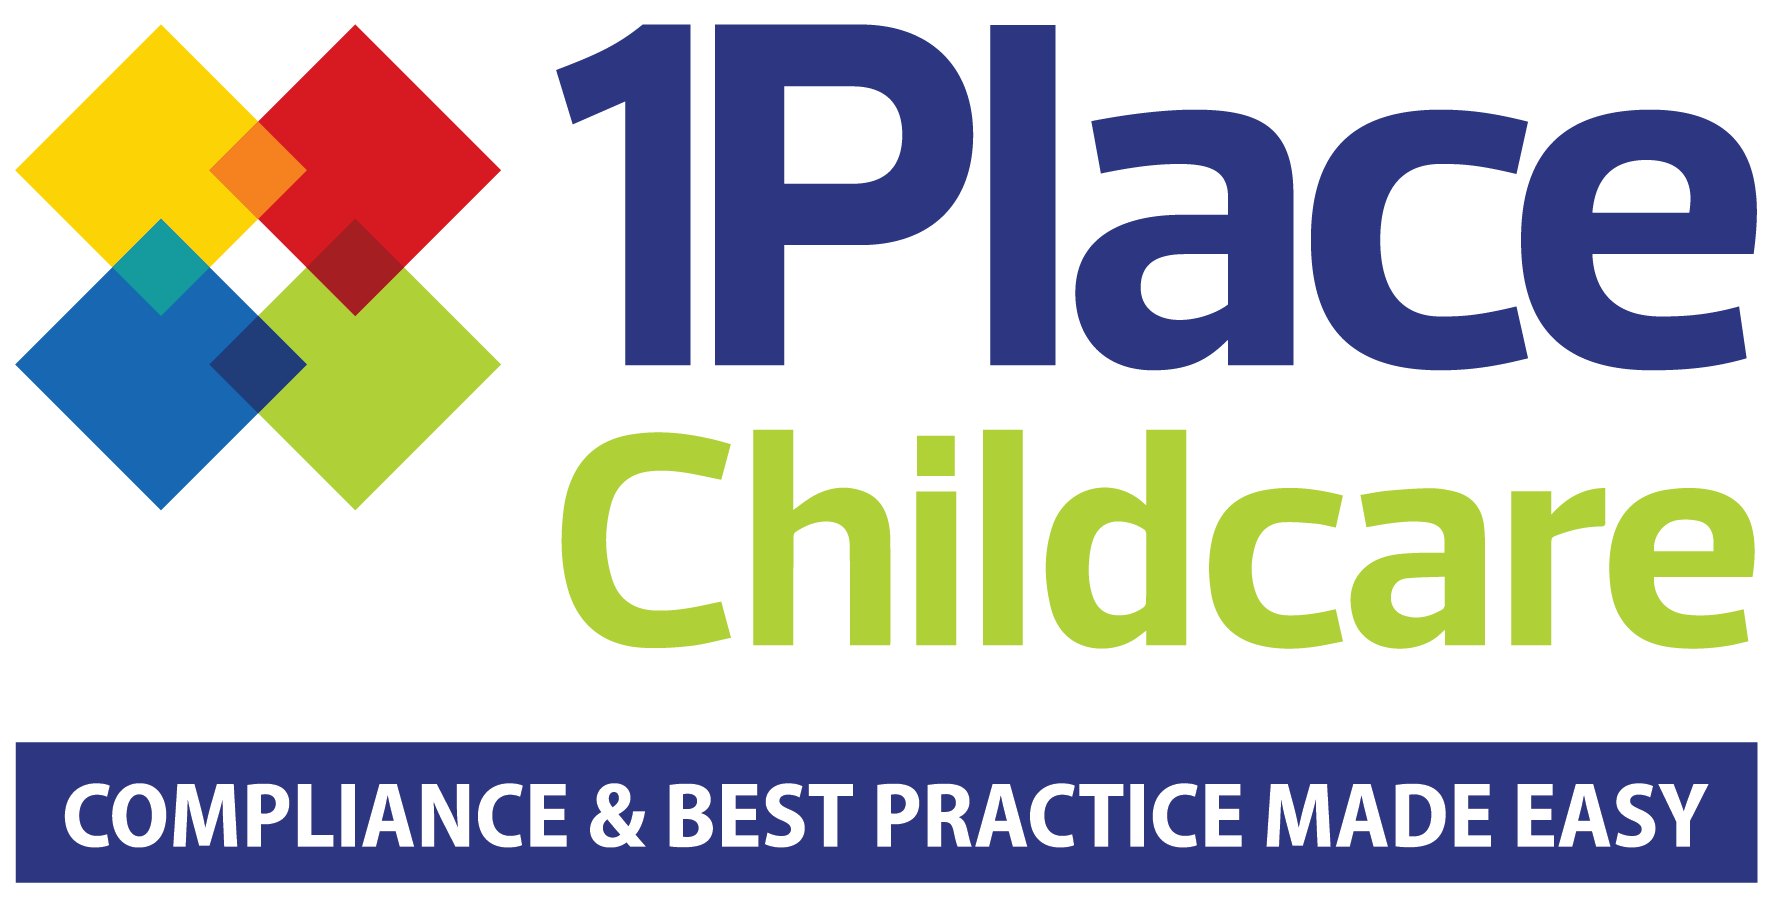 M233218 1Place Childcare logo with Tagline FA 01